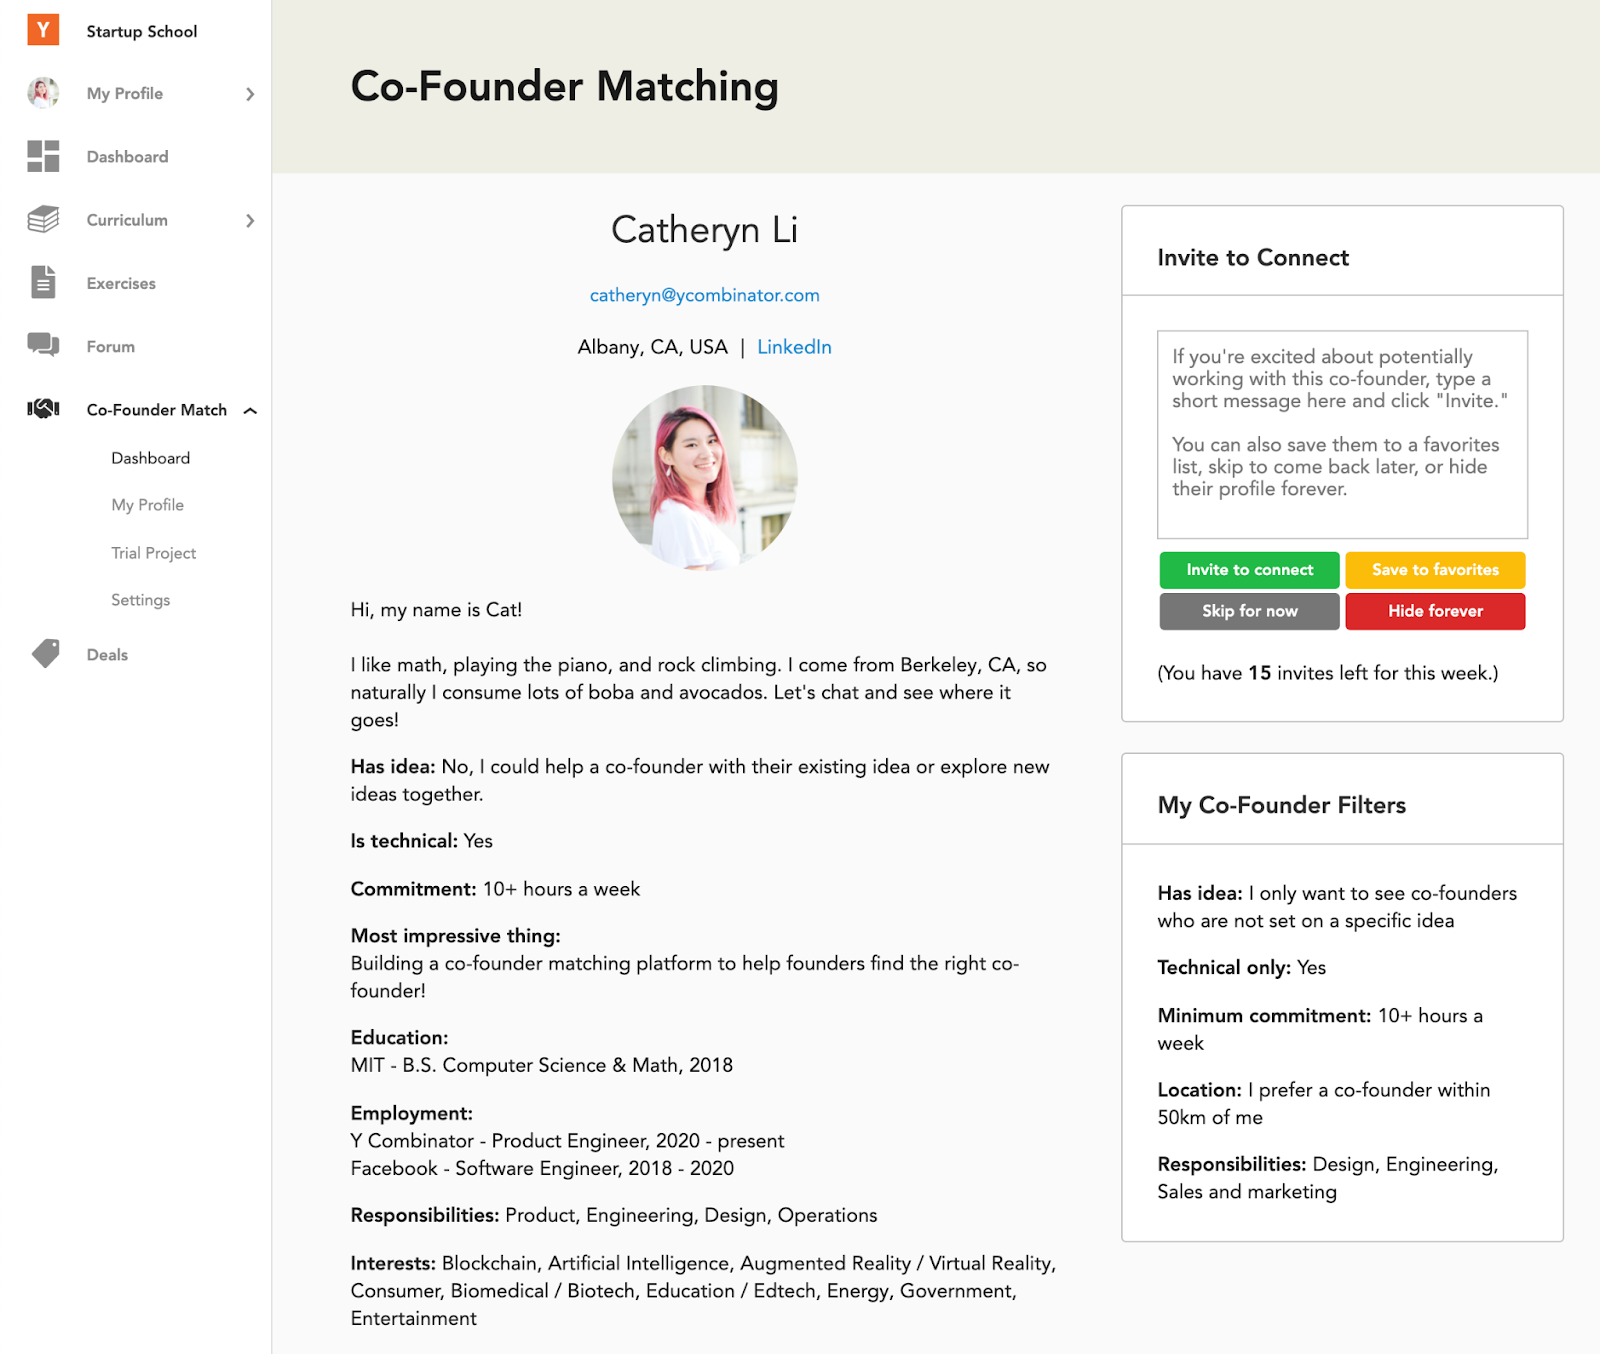 YC's co-founder matching platform